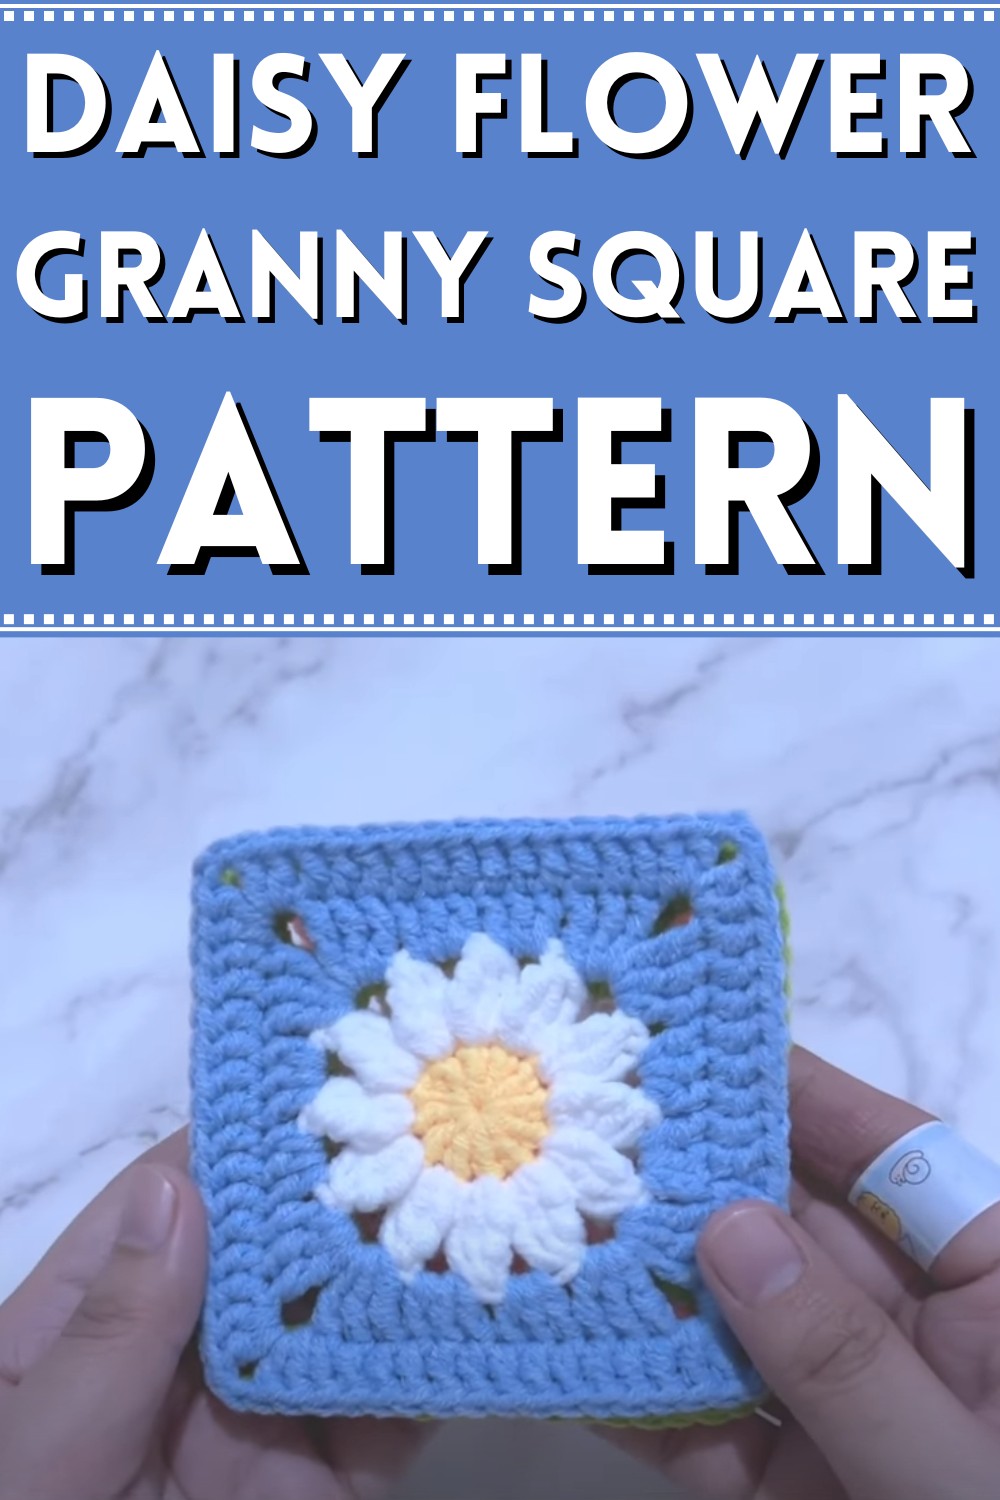 Daisy Flower Granny Square